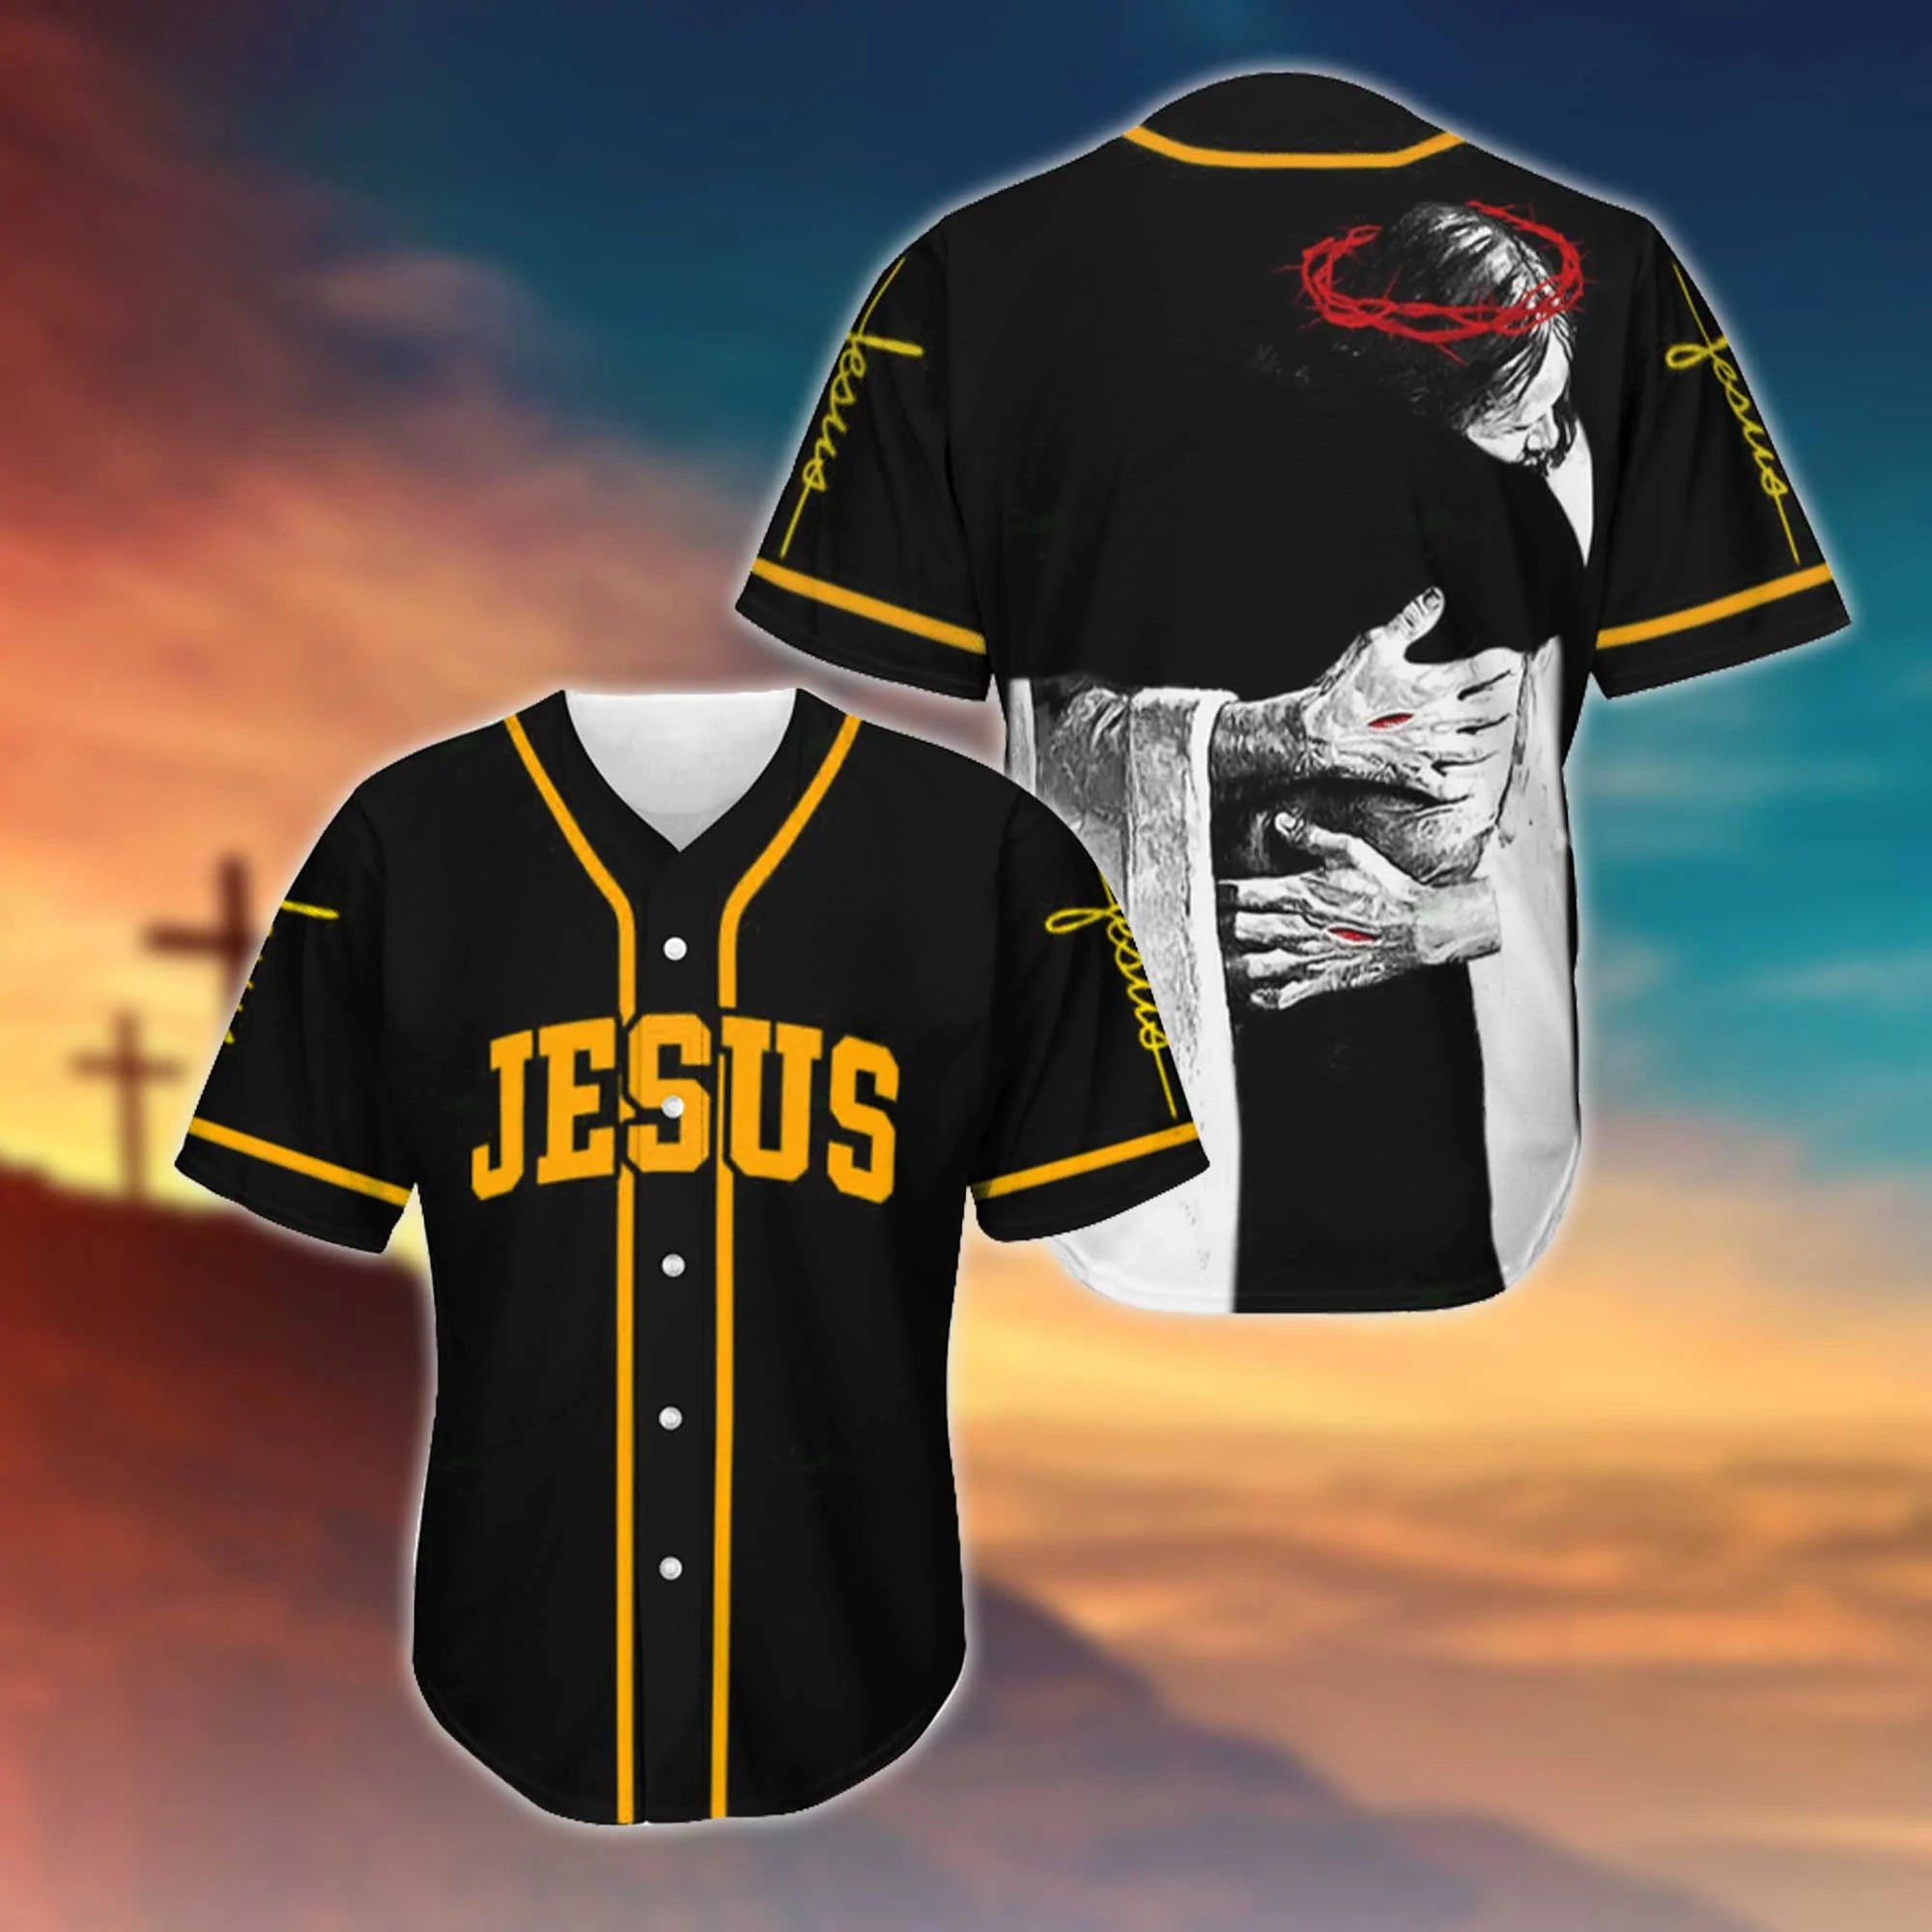 Jesus God's Hug Printed 3D Baseball Jersey For Men and Women